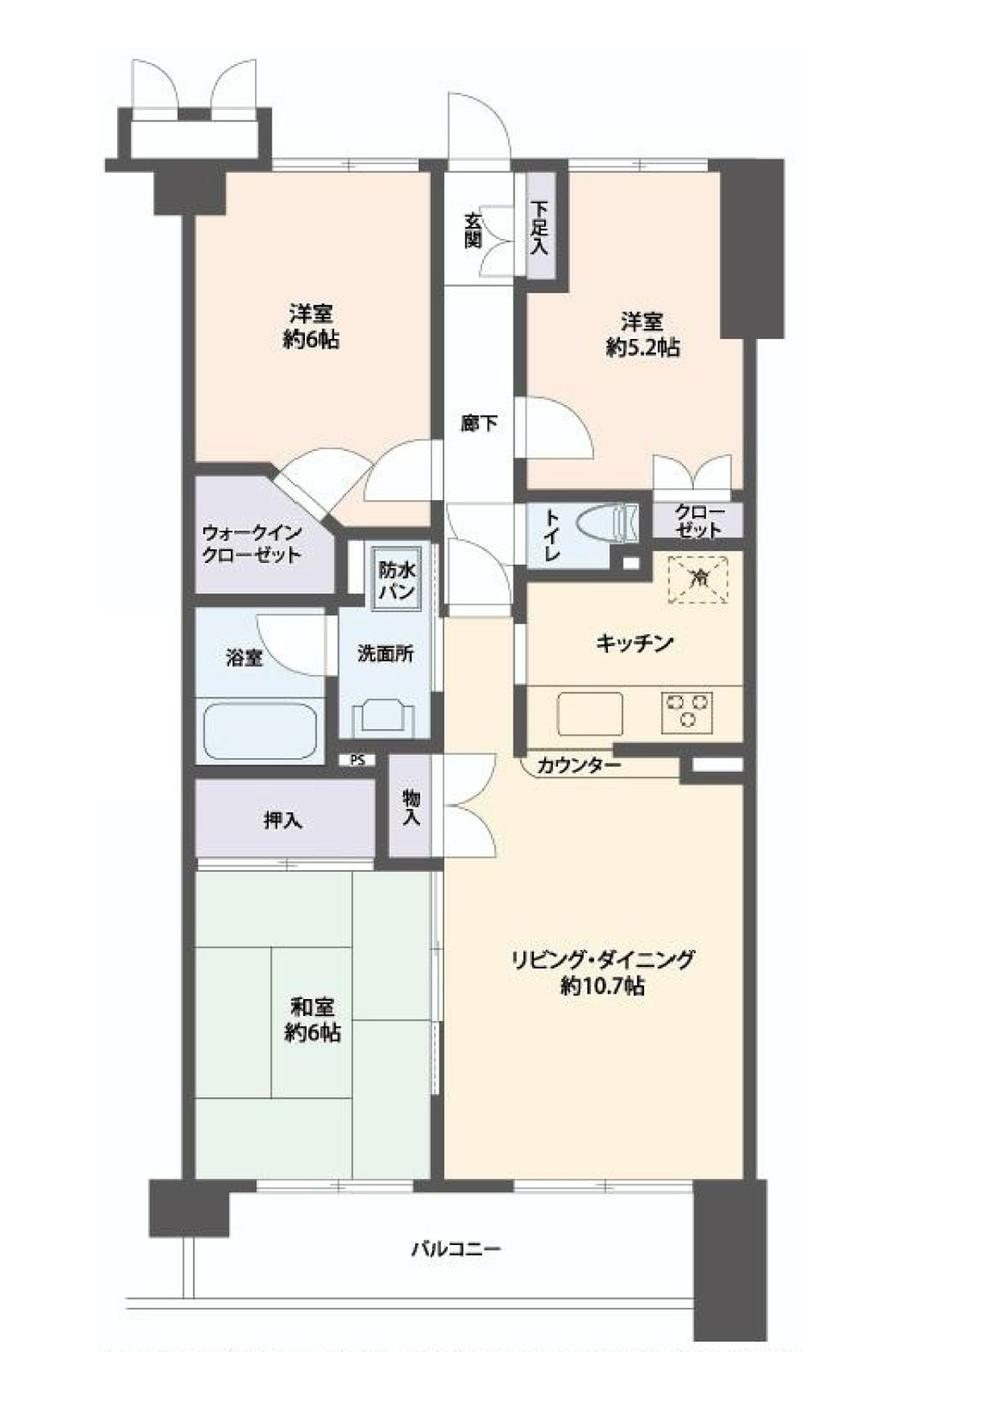 Floor plan. 3LDK, Price 28.8 million yen, Footprint 67.8 sq m , Balcony area 9 sq m